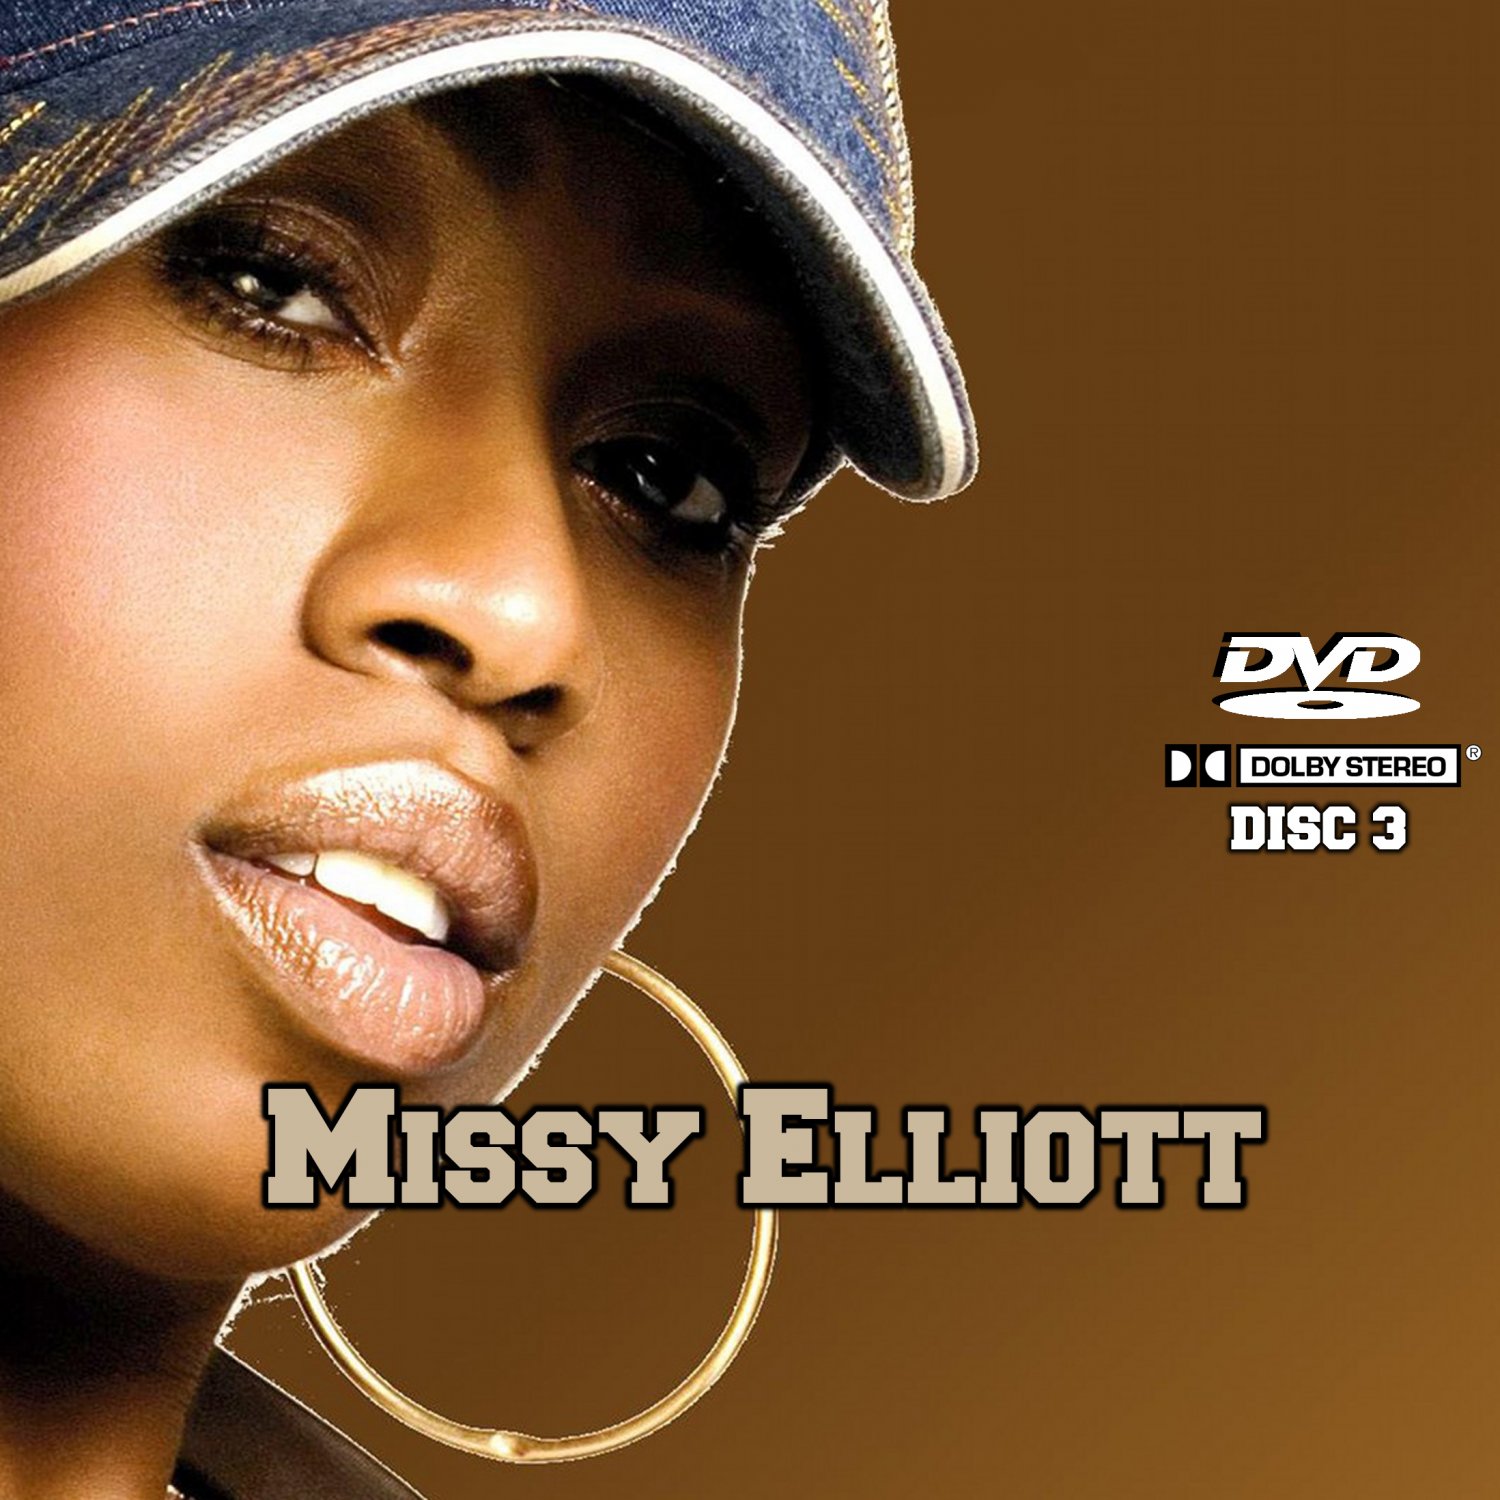 Missy Elliott Music Videos Collection (3 DVD's) 66 Music Videos